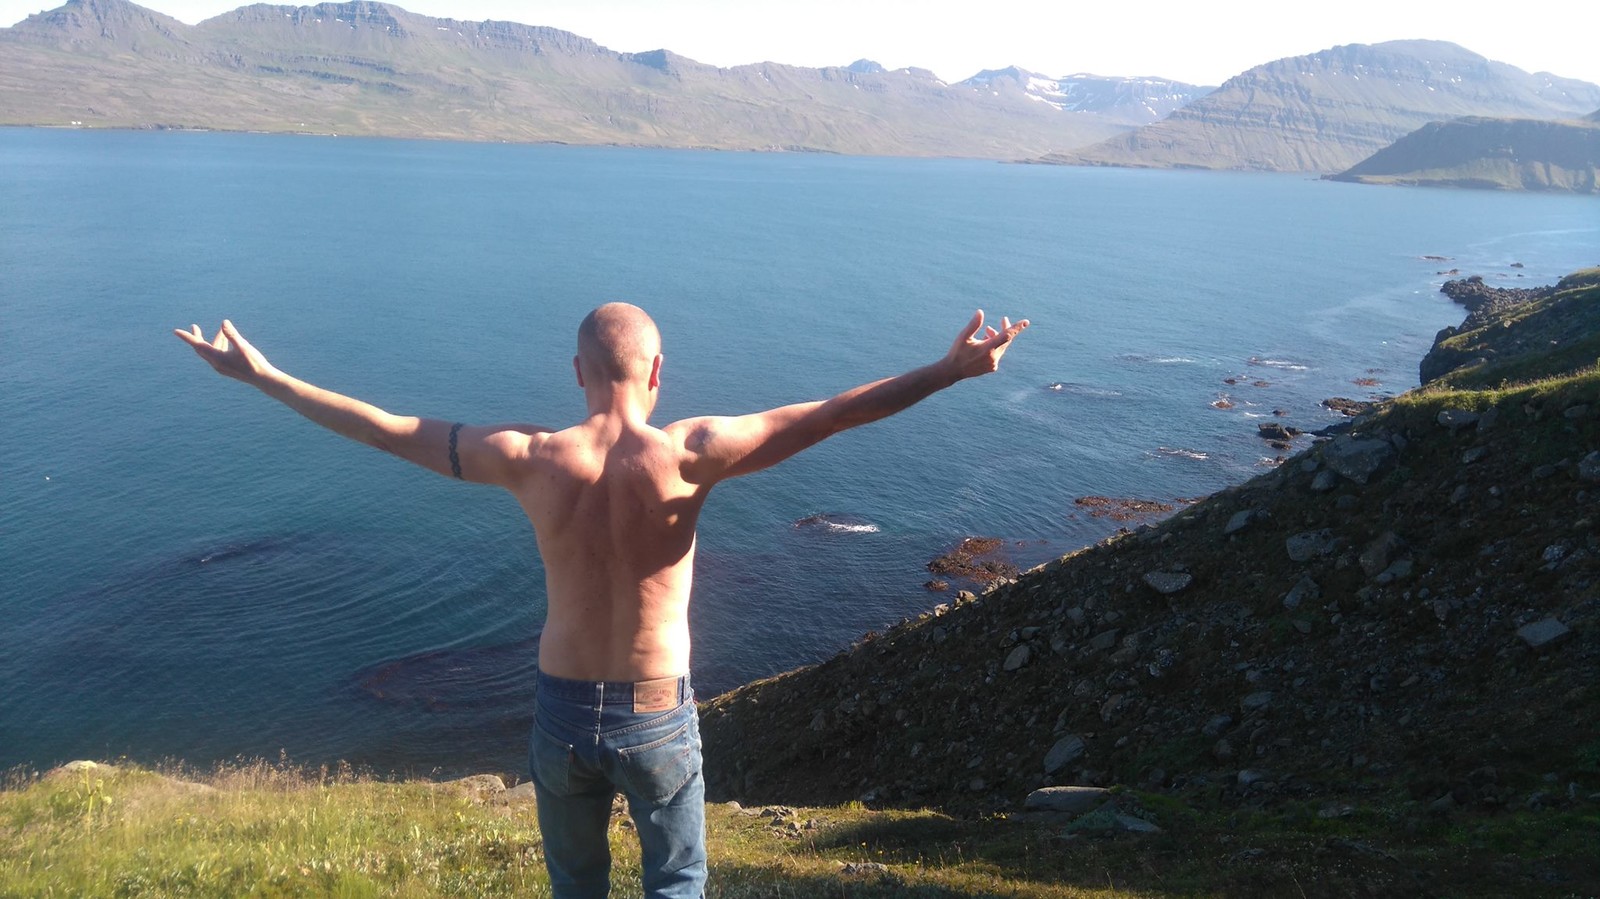 Iceland sets you free